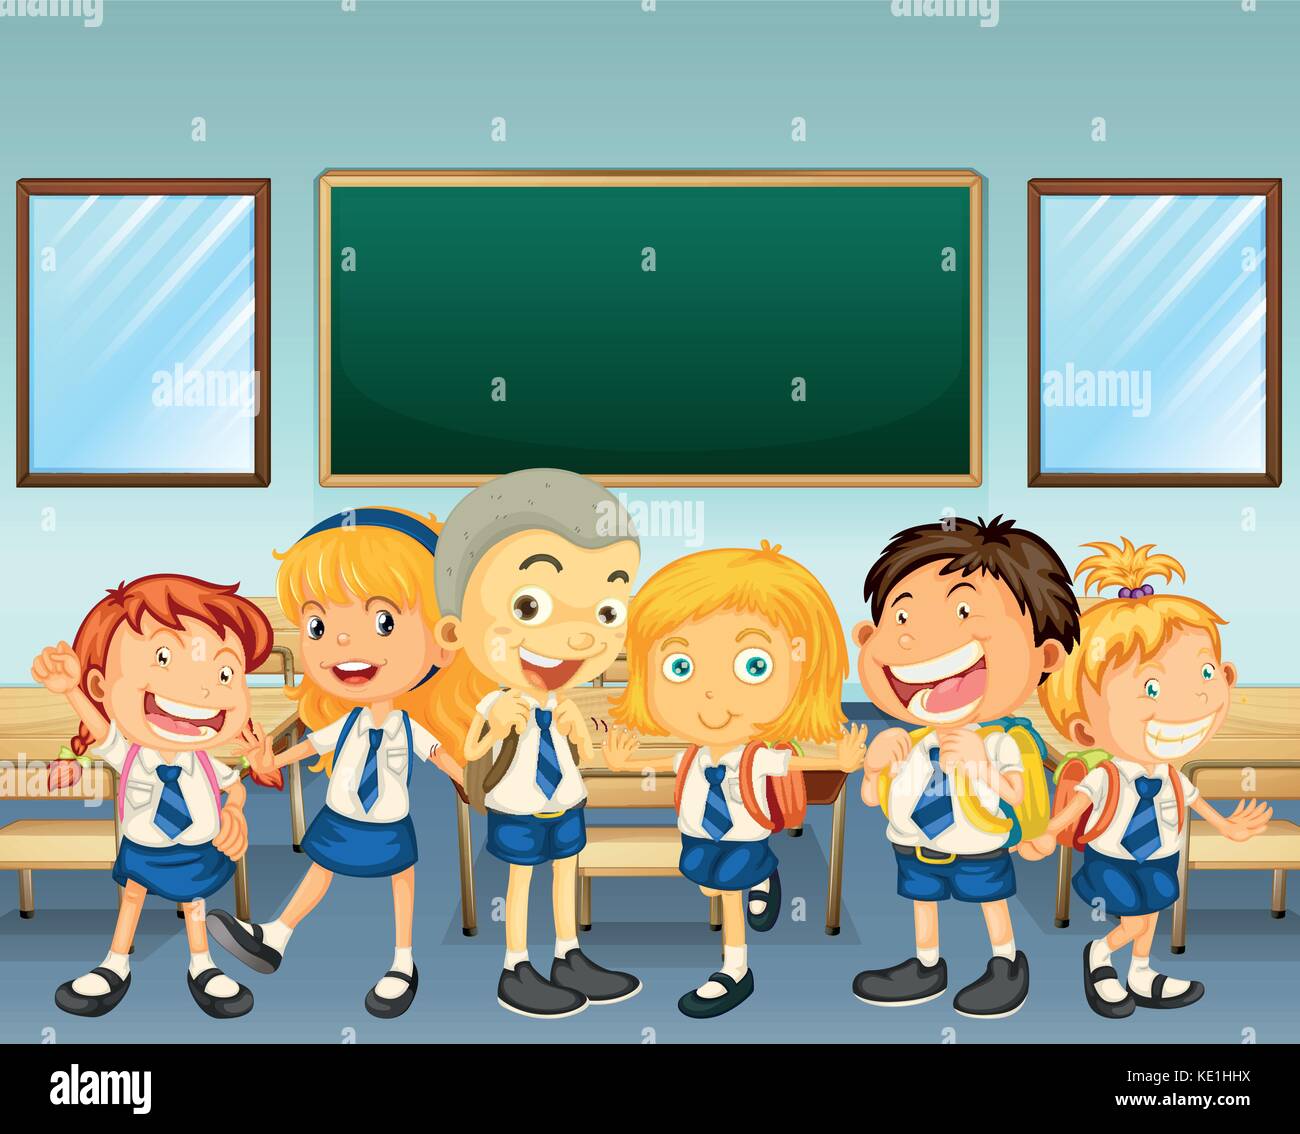 Students in uniform standing in classroom illustration Stock Vector Image &  Art - Alamy